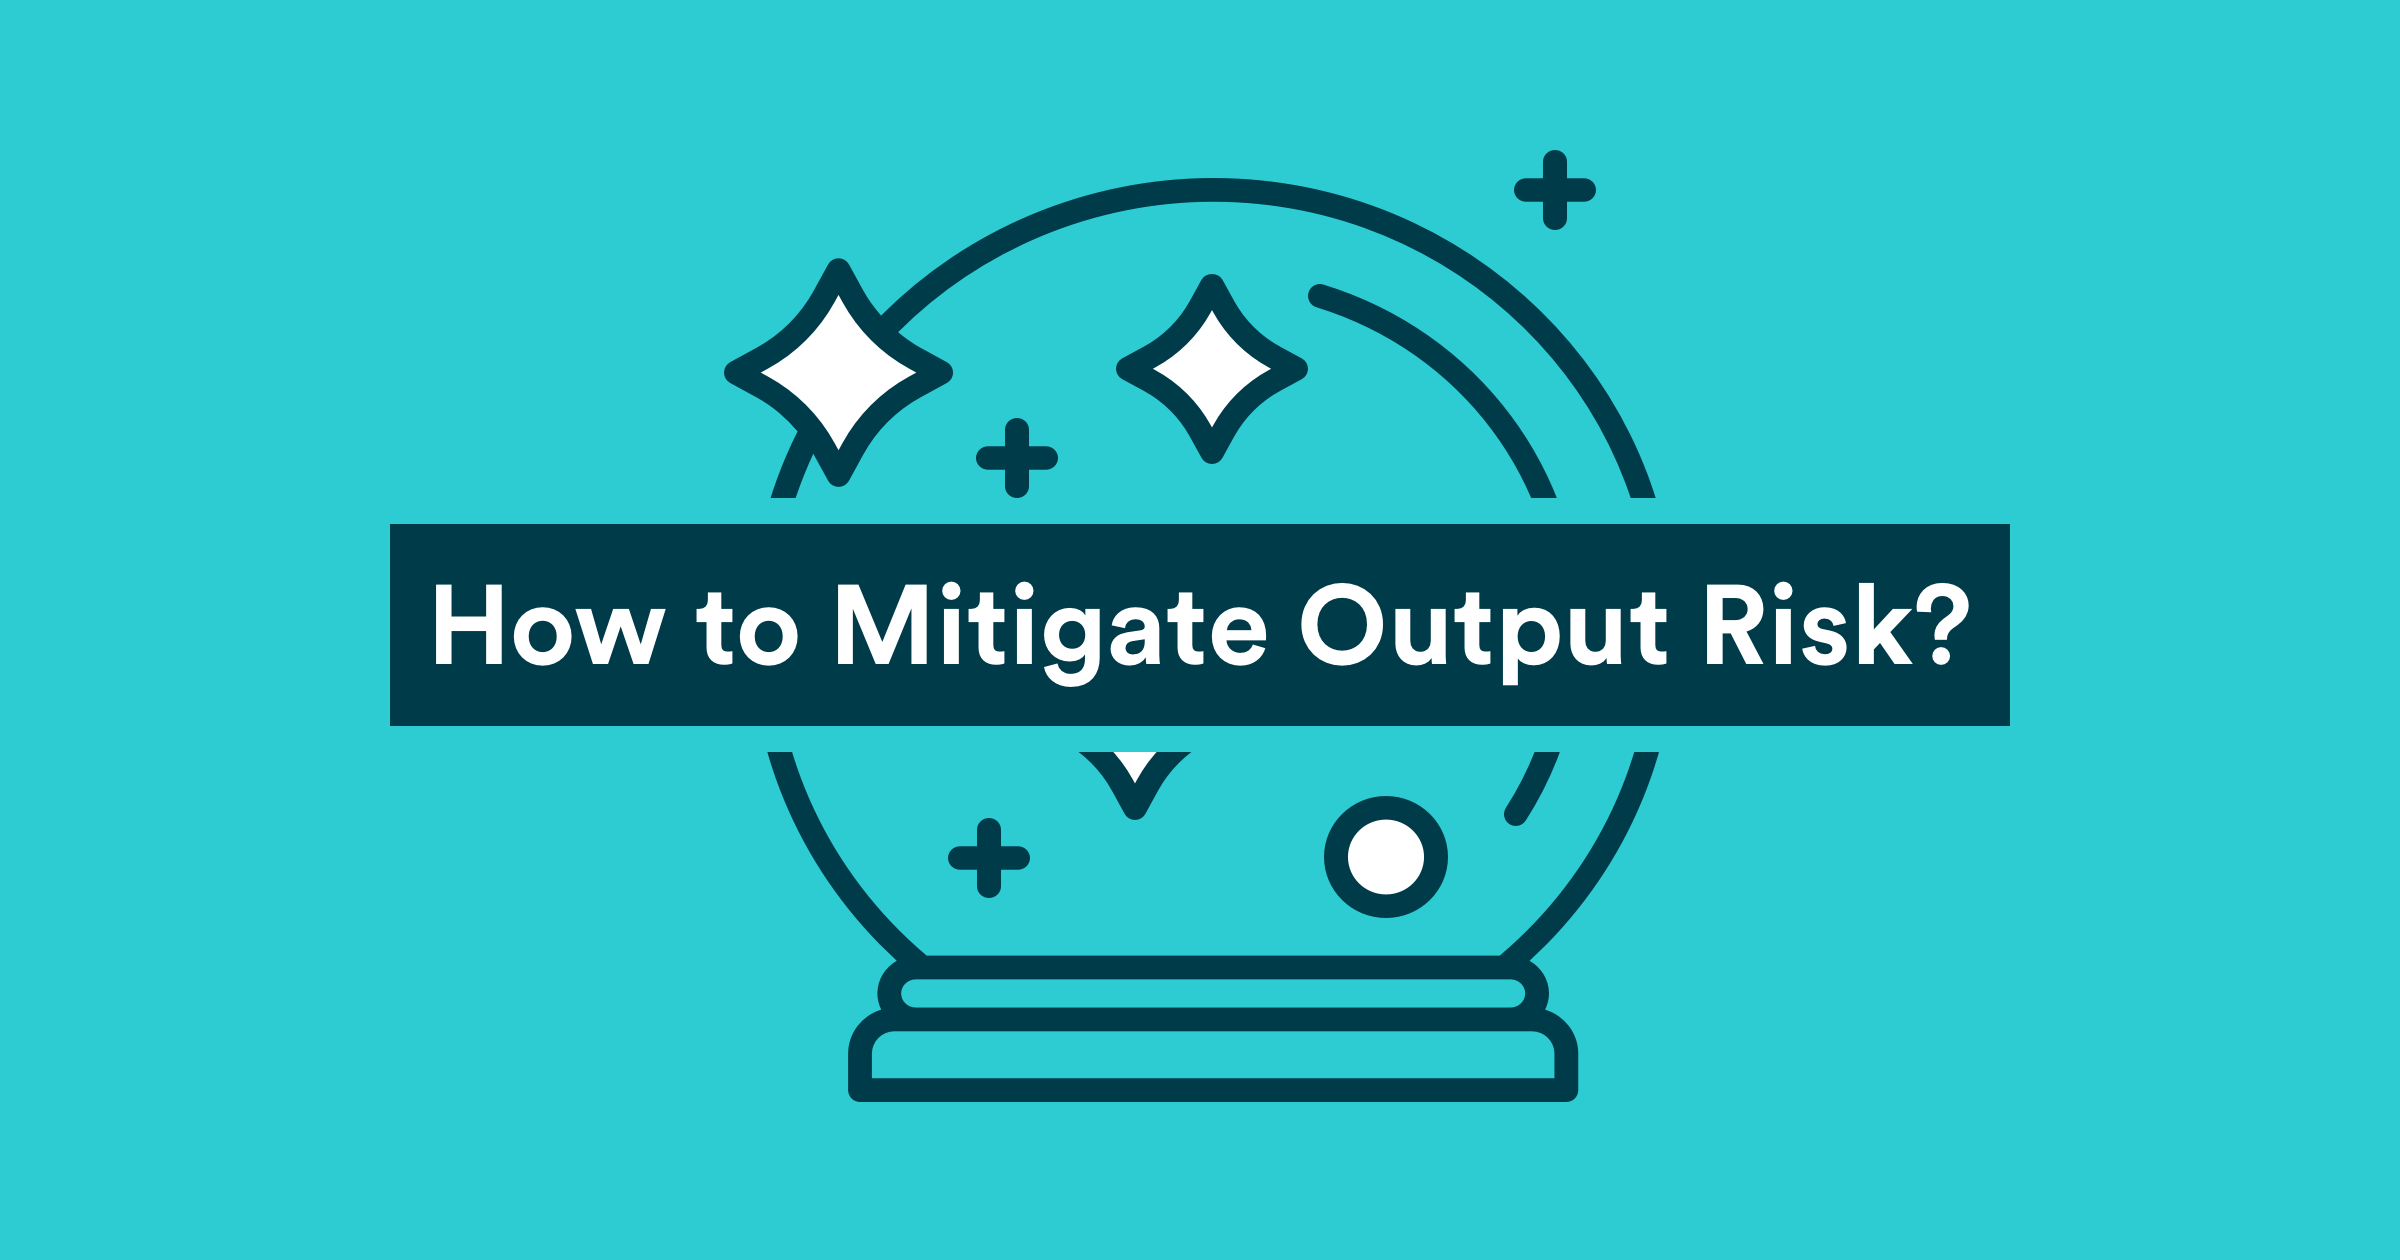 Three ways to mitigate model output risk